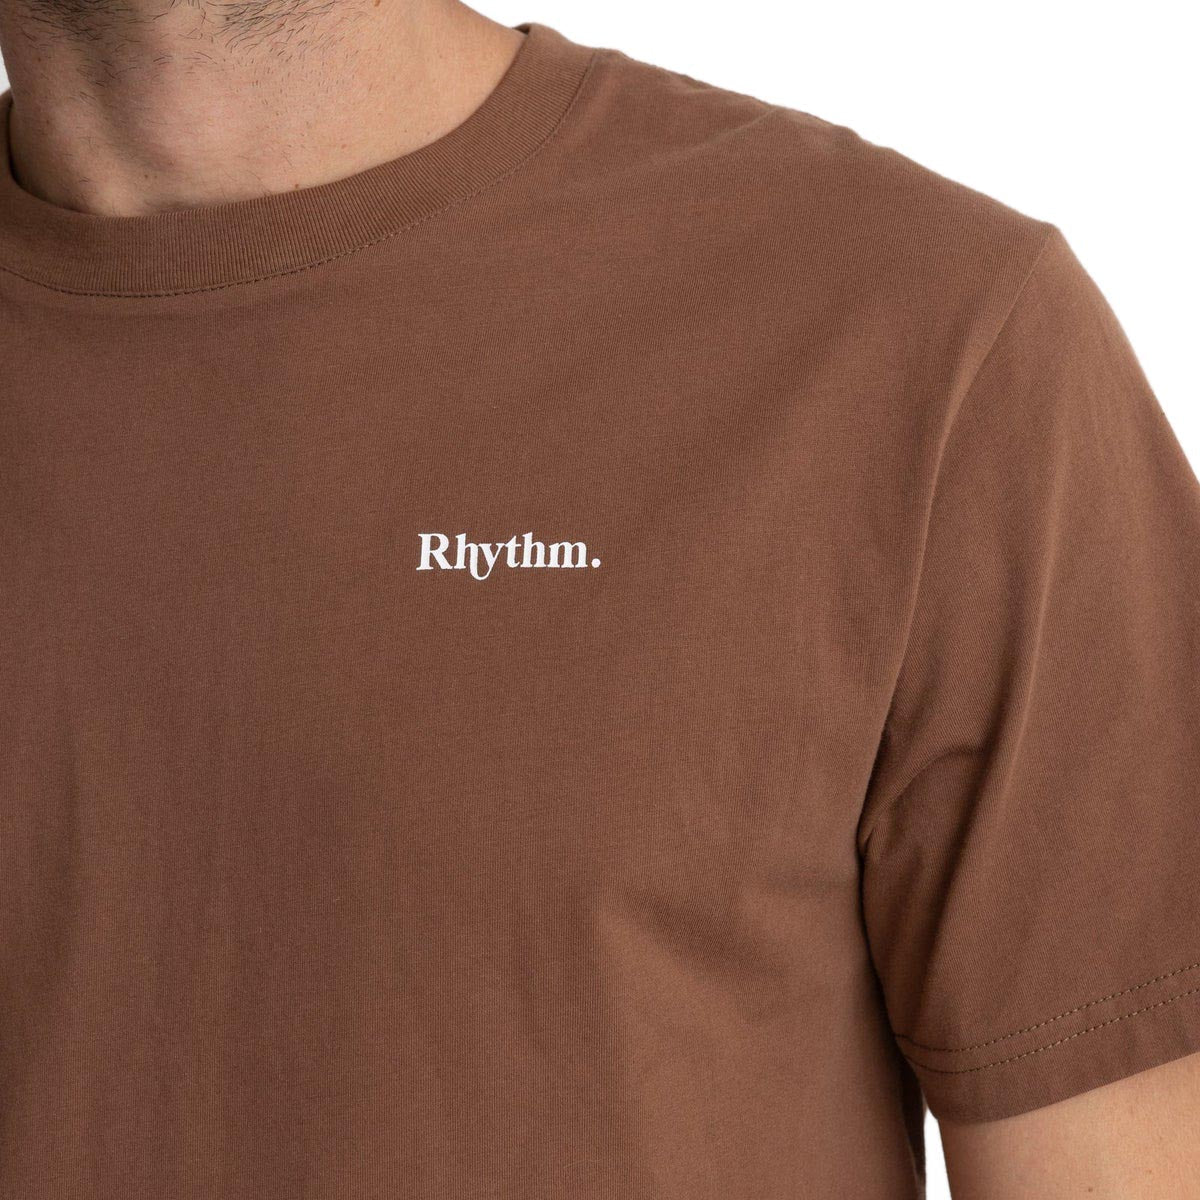 Rhythm Classic Brand T-Shirt - Chocolate image 3